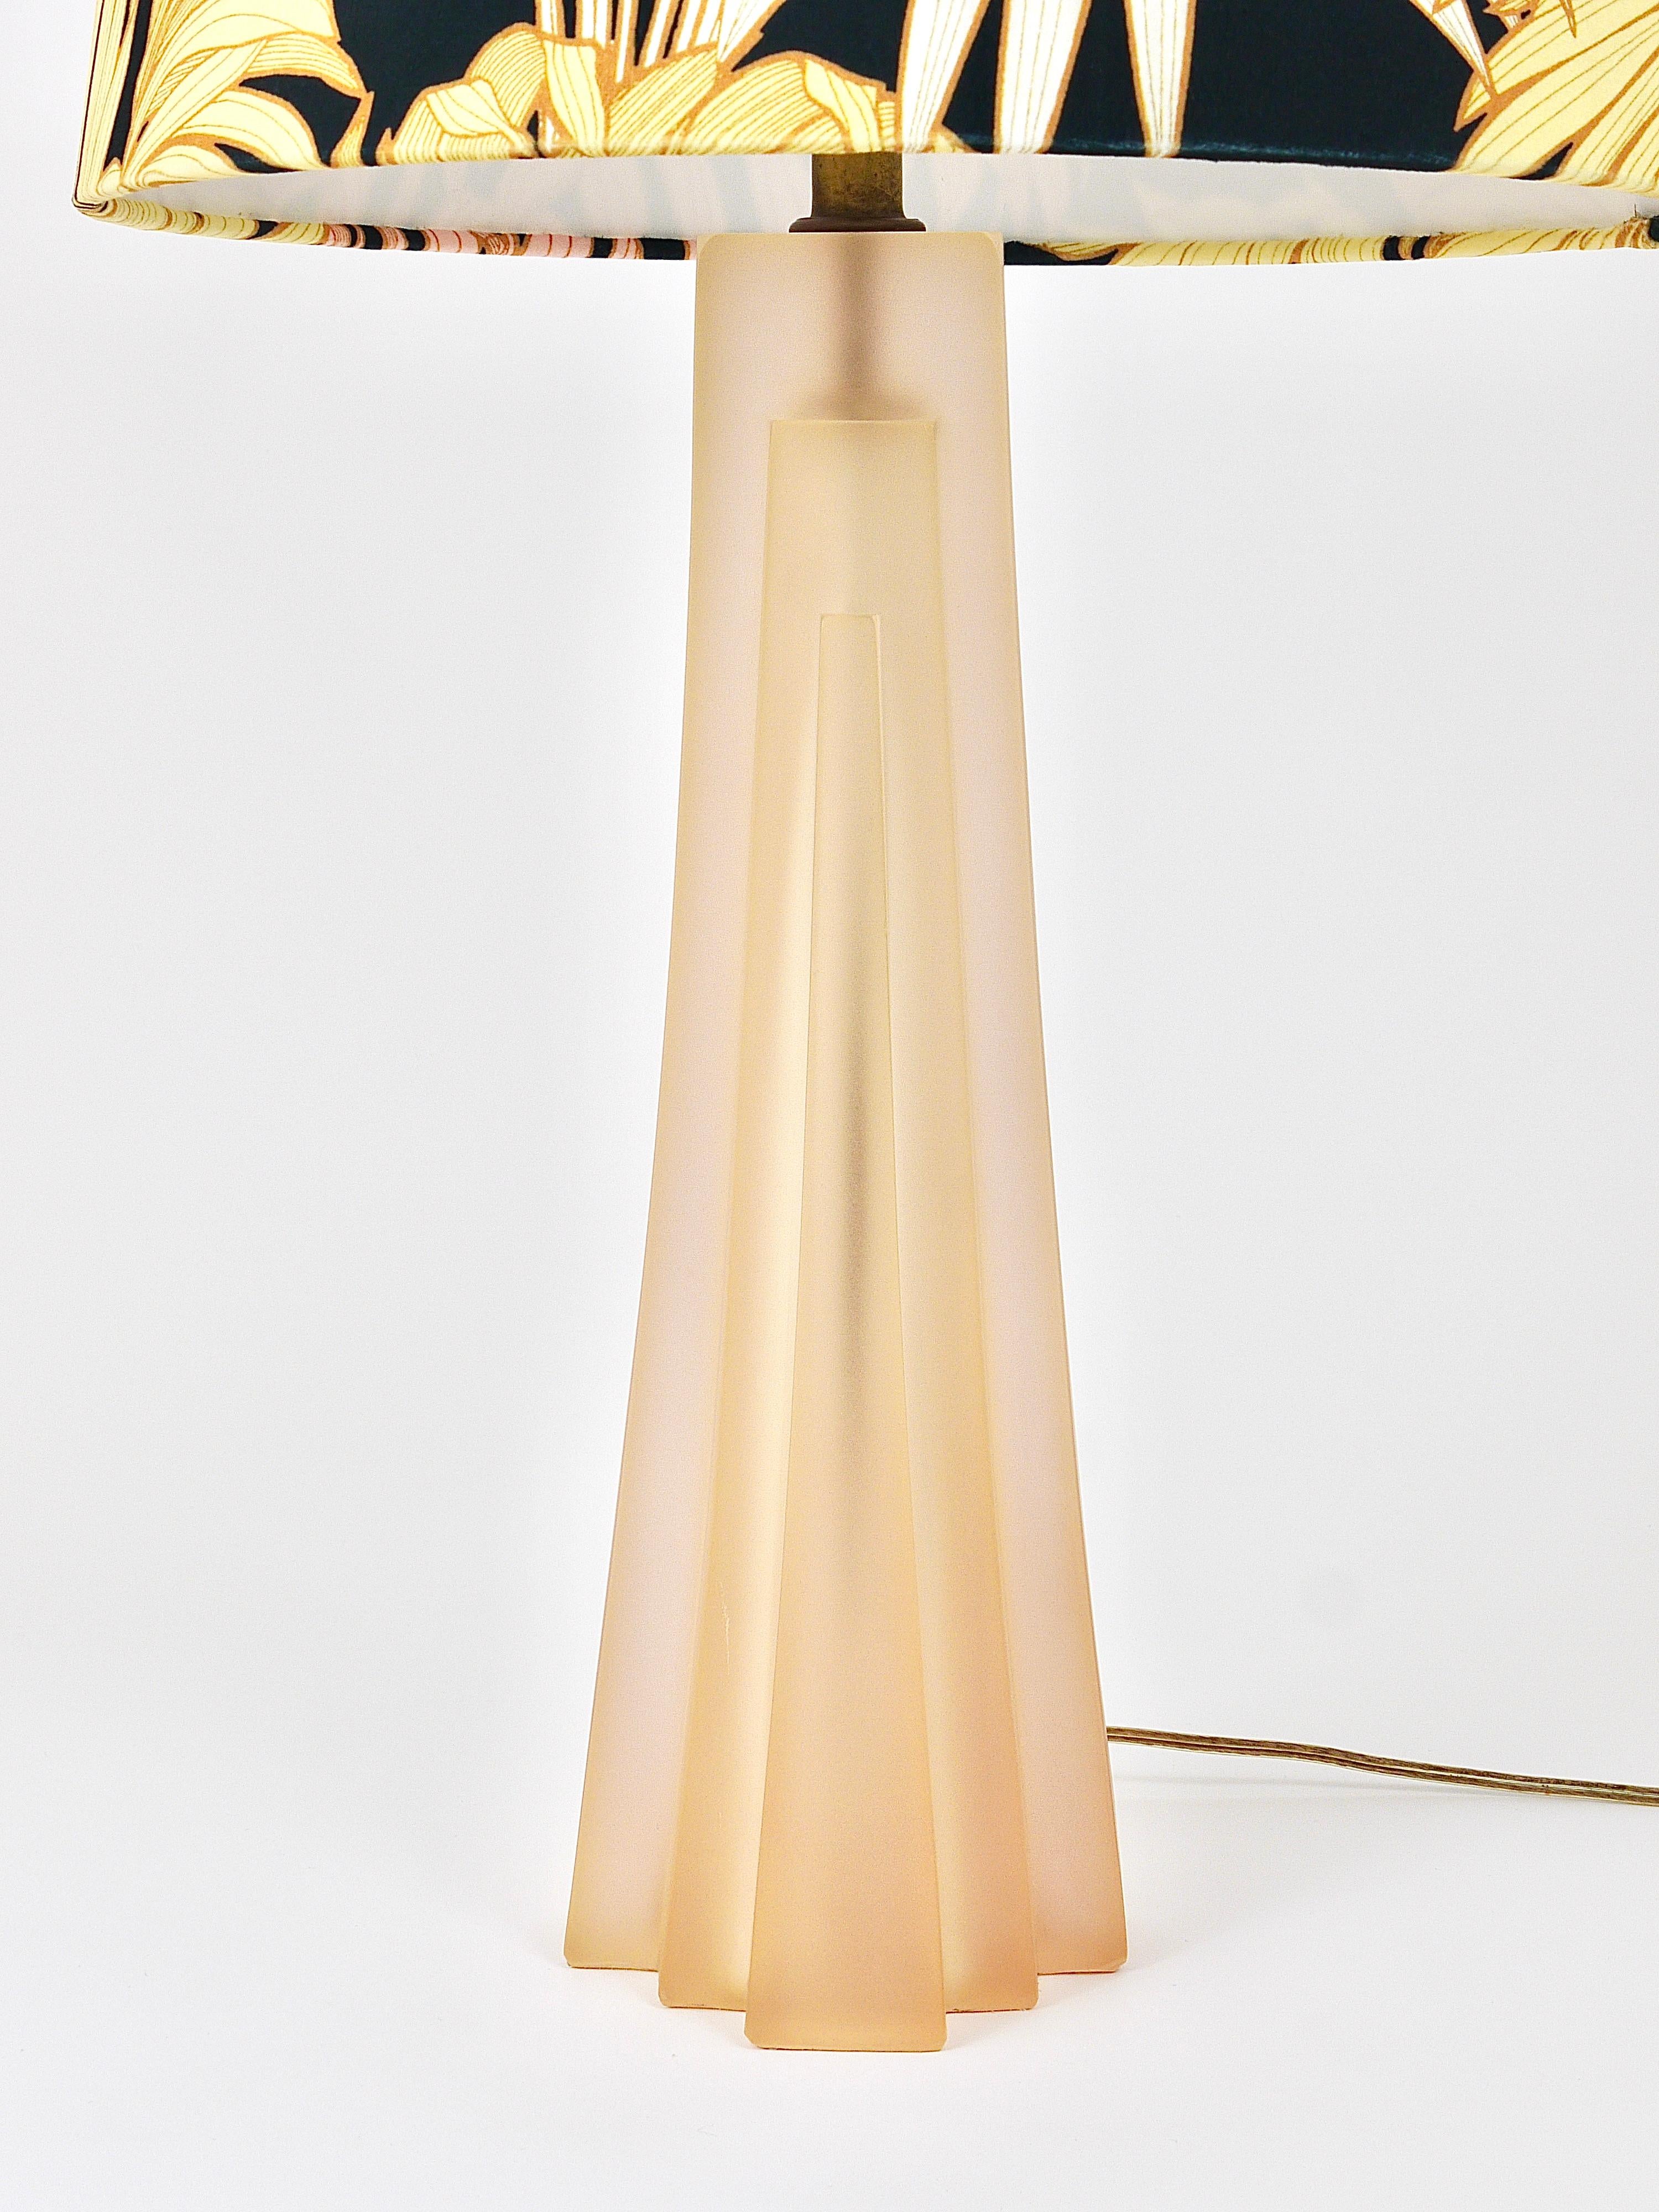 Paolo Gucci Art Deco Skyscraper Table Lamp, Lucite, Brass, Velvet, Italy, 1980s For Sale 8